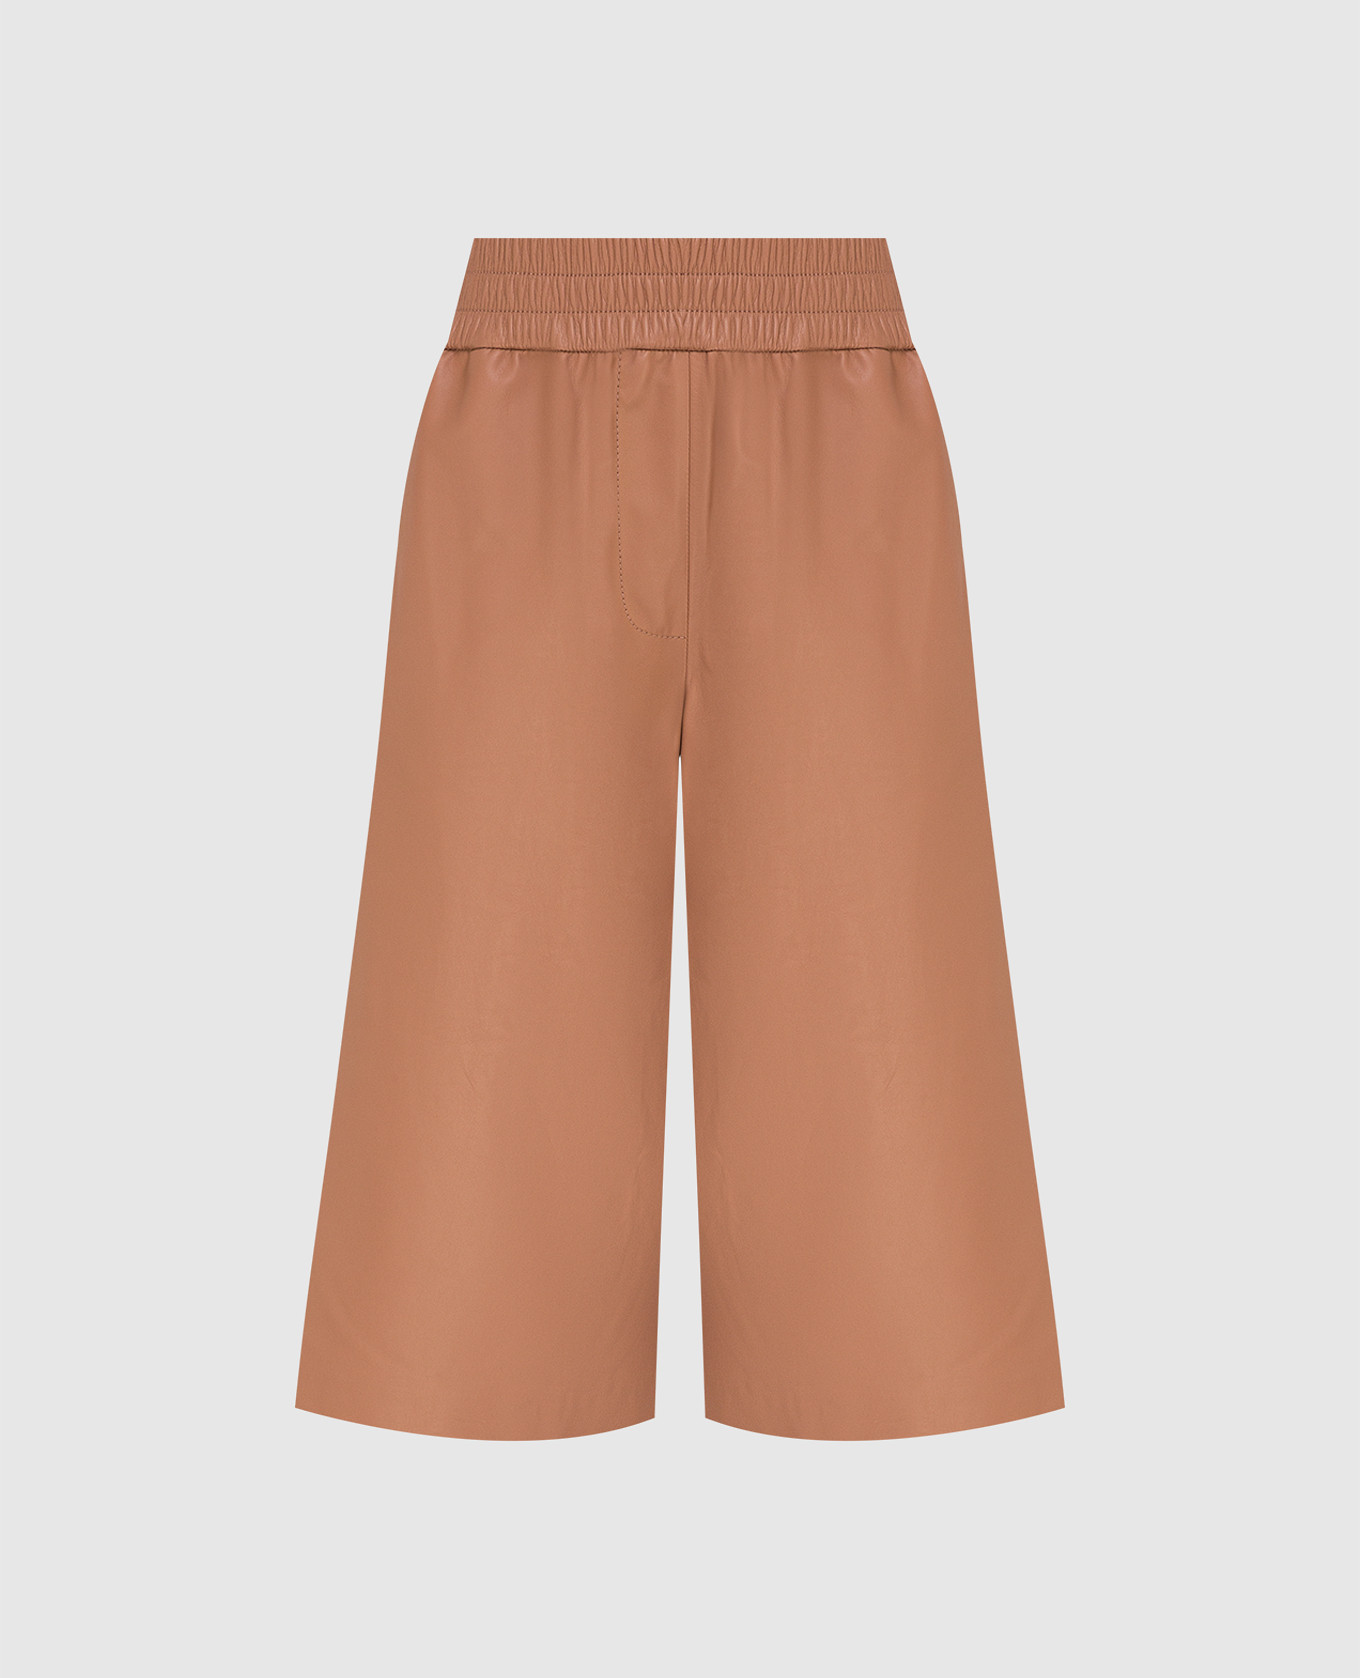 Terracotta leather bermuda shorts